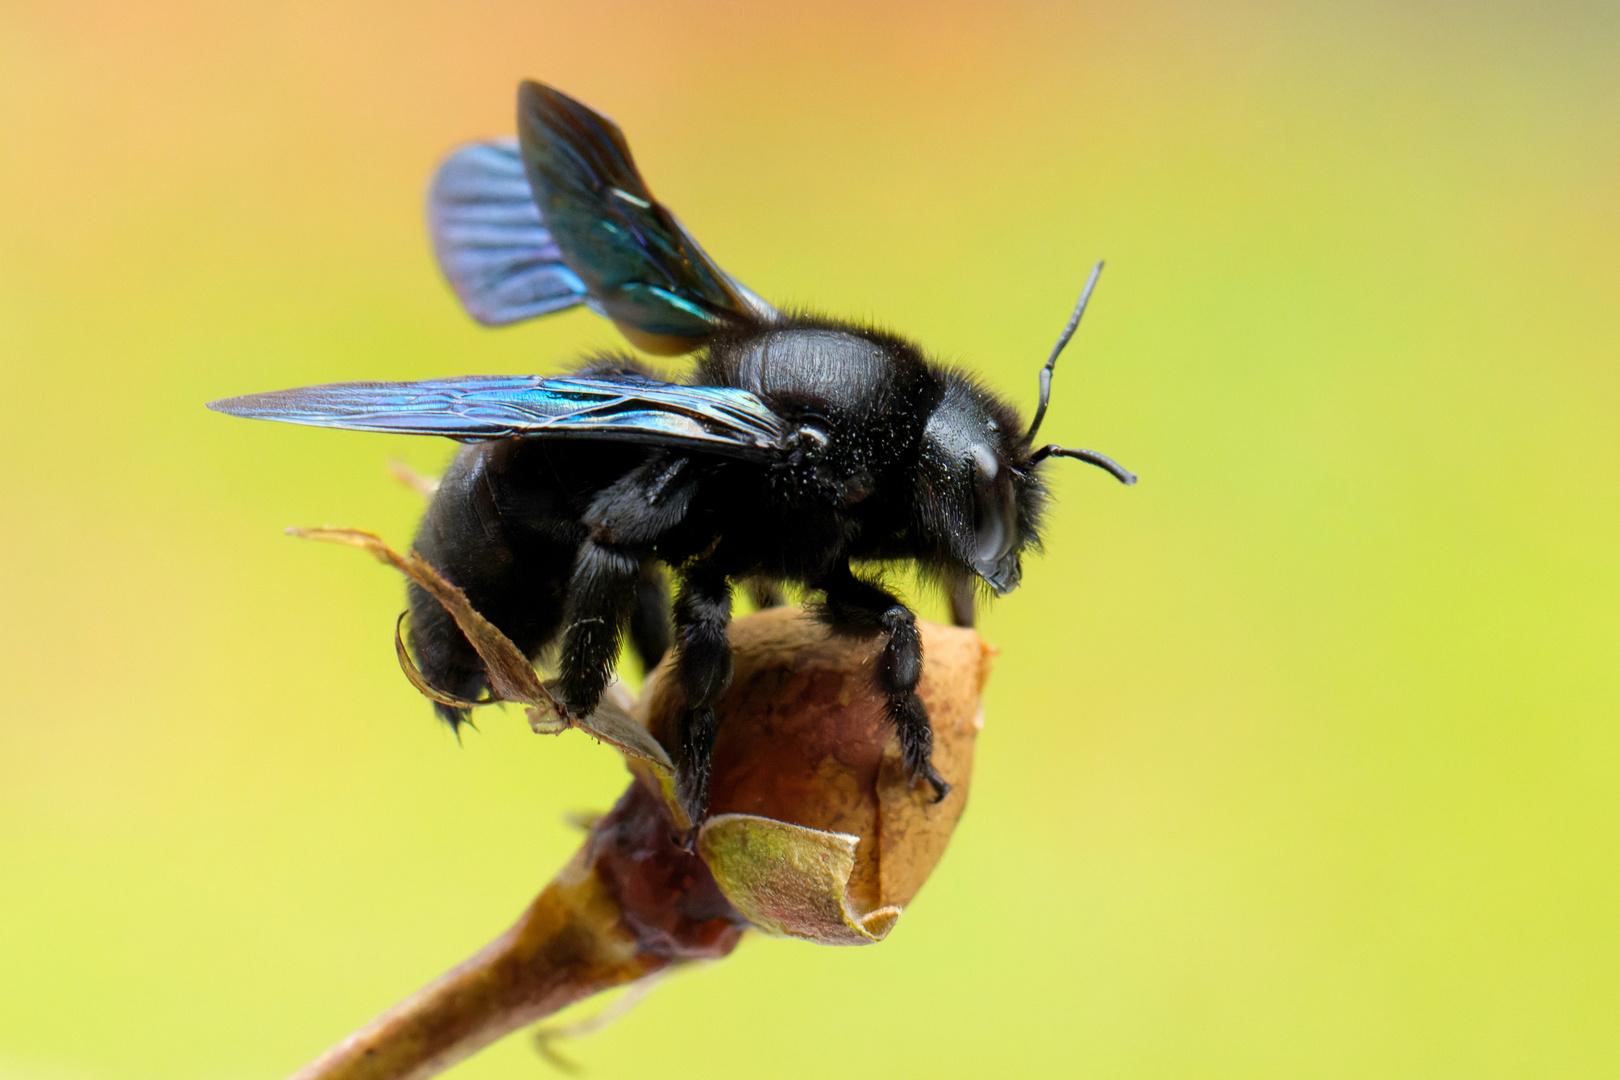 Blauschwarze Holzbiene (Xylocopa violacea) oder evtl. eine Große Holzbiene X. Valga 